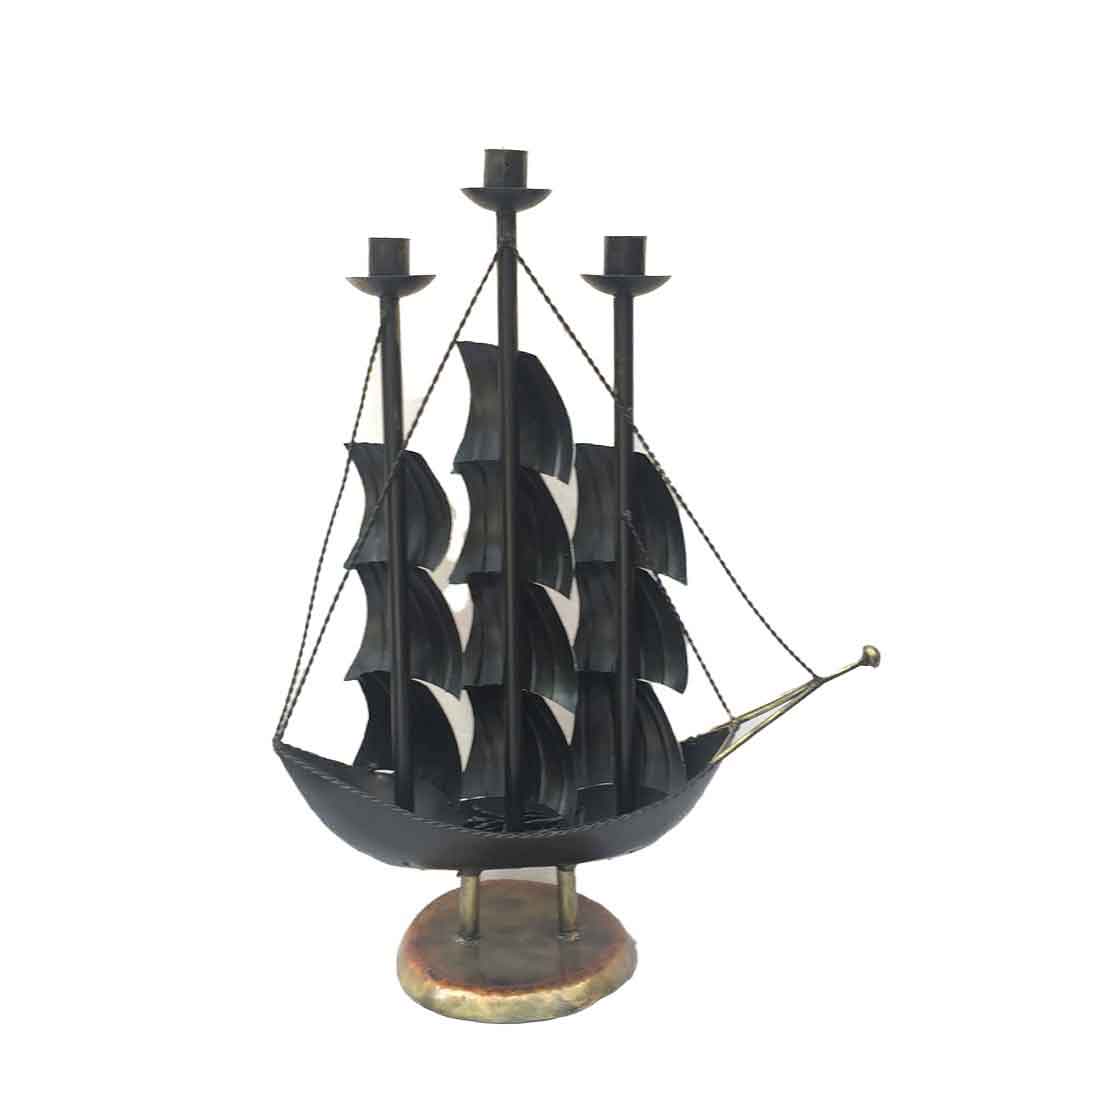 LED Ship - Antique Showpiece - For Table Decor & Gifts - 25 Inch - ApkaMart